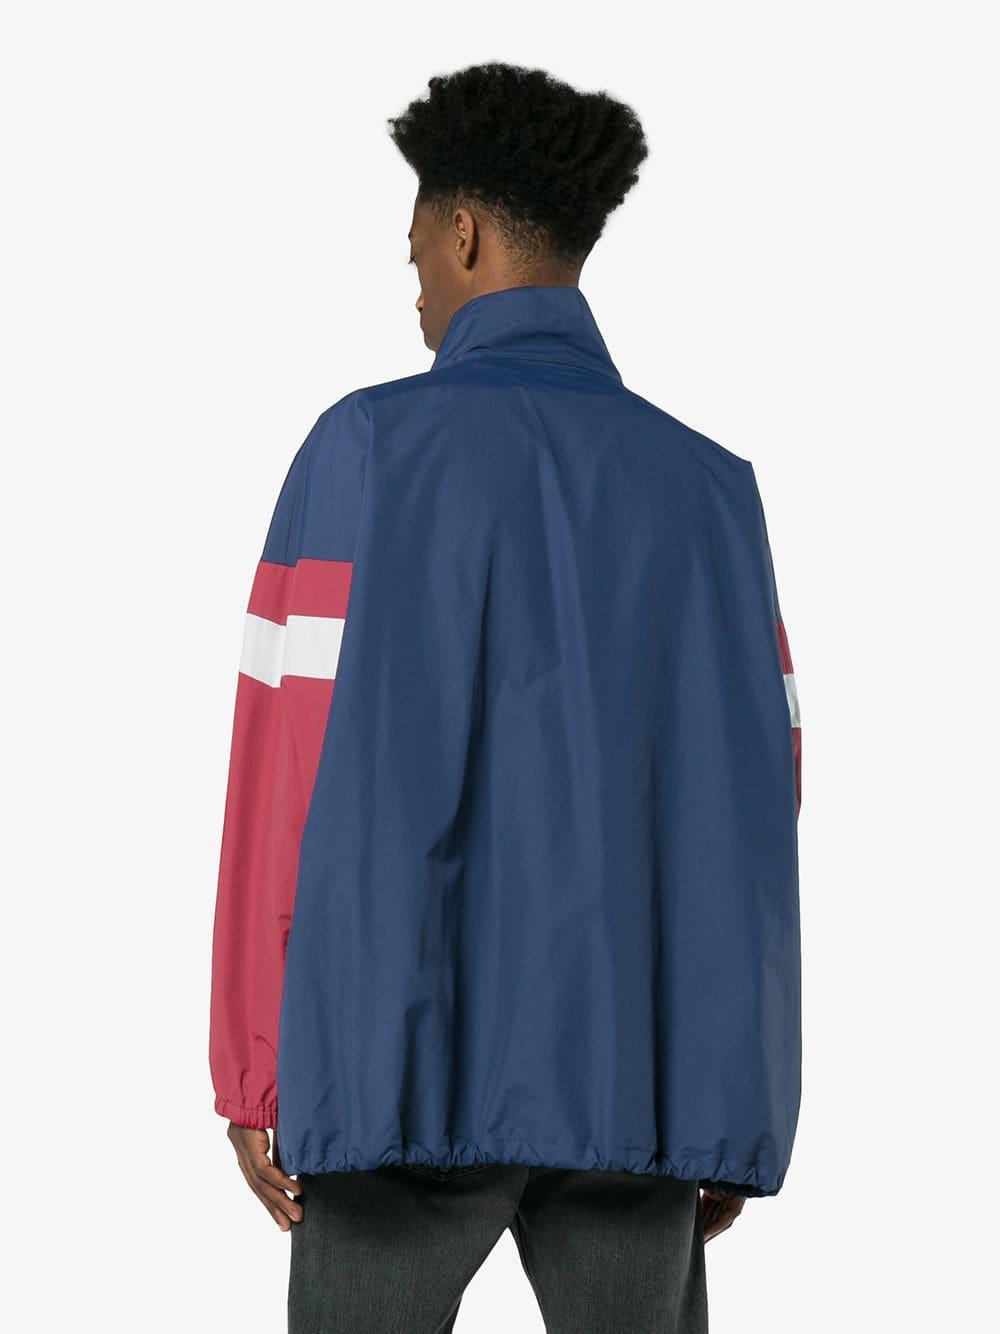 Balenciaga Synthetic Logo Print Stripe Track Jacket in Blue for Men - Lyst